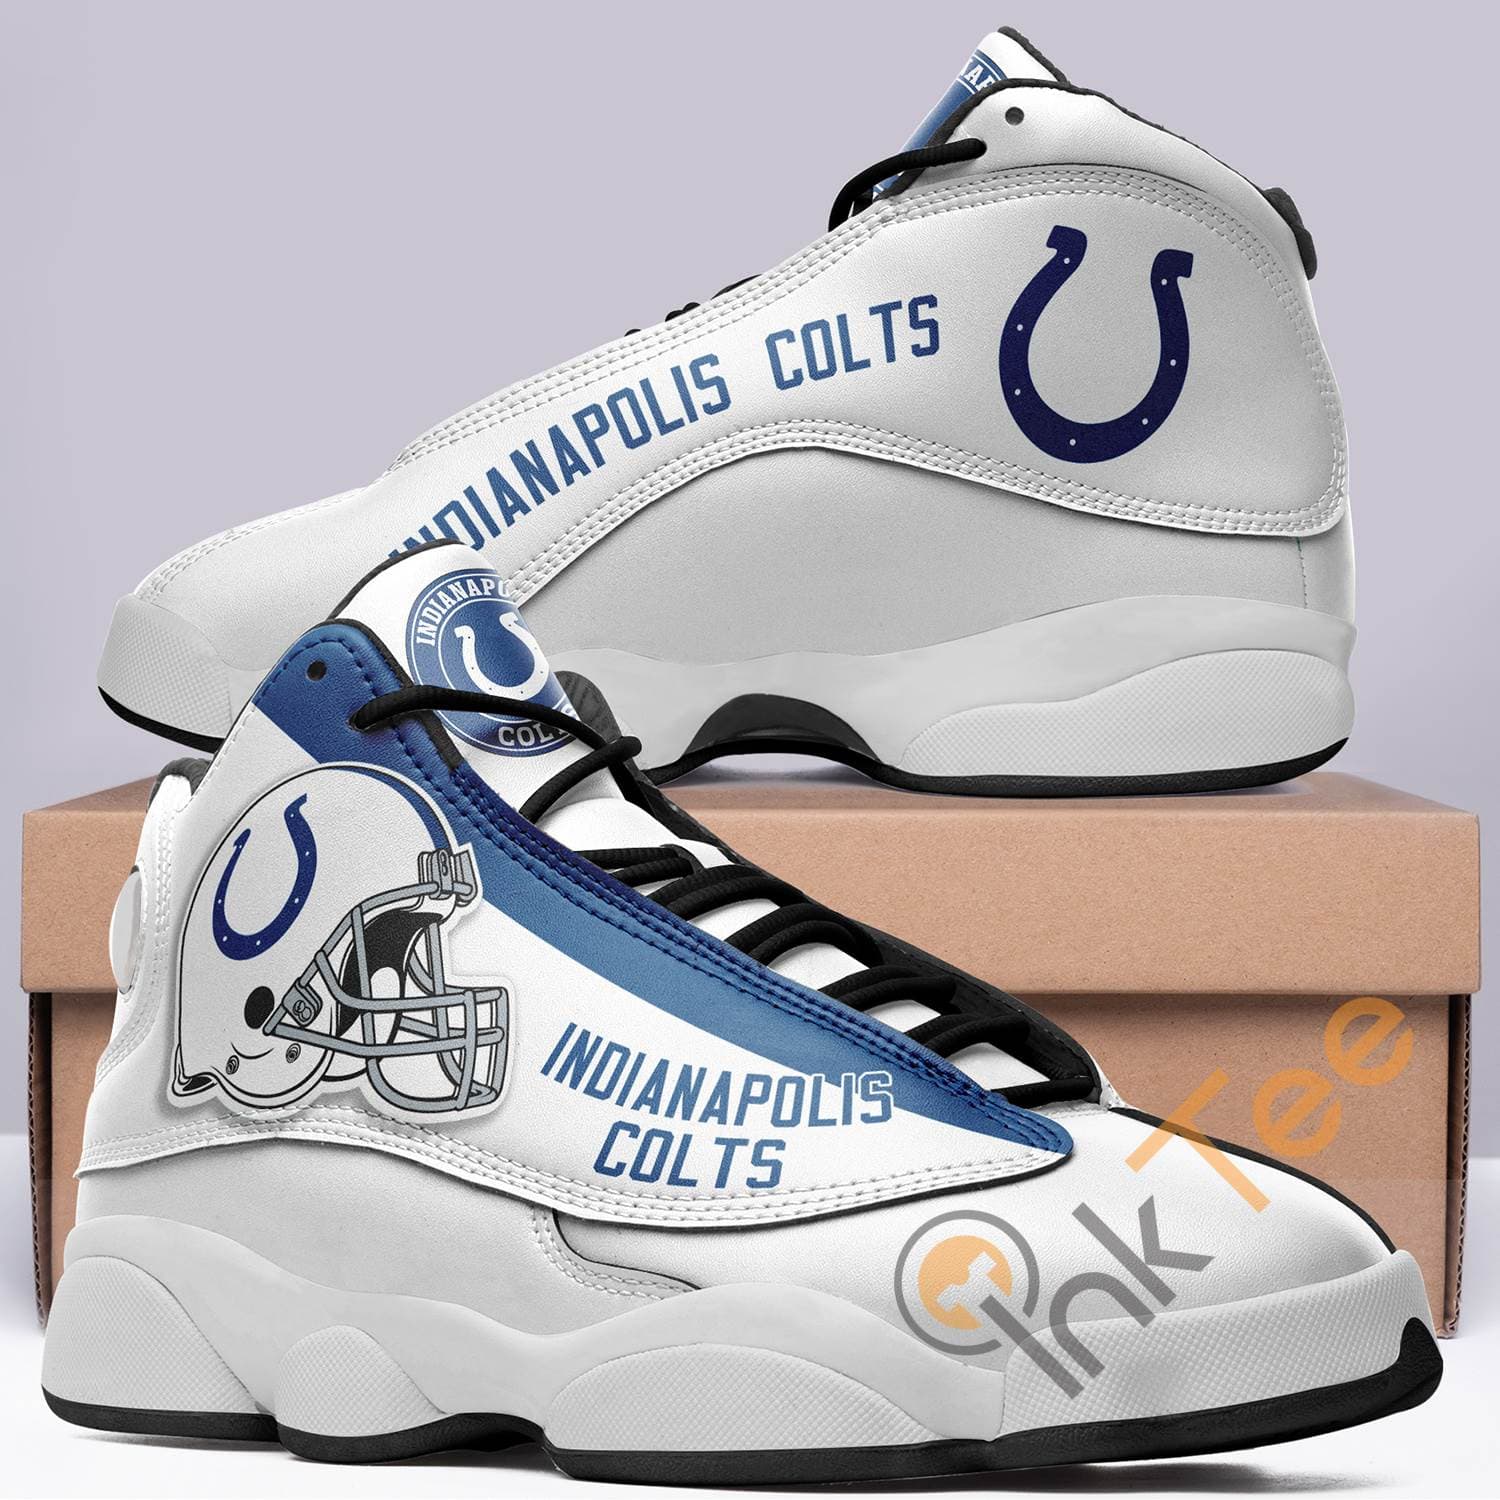 Indianapolis Colts Team Air Jordan Shoes